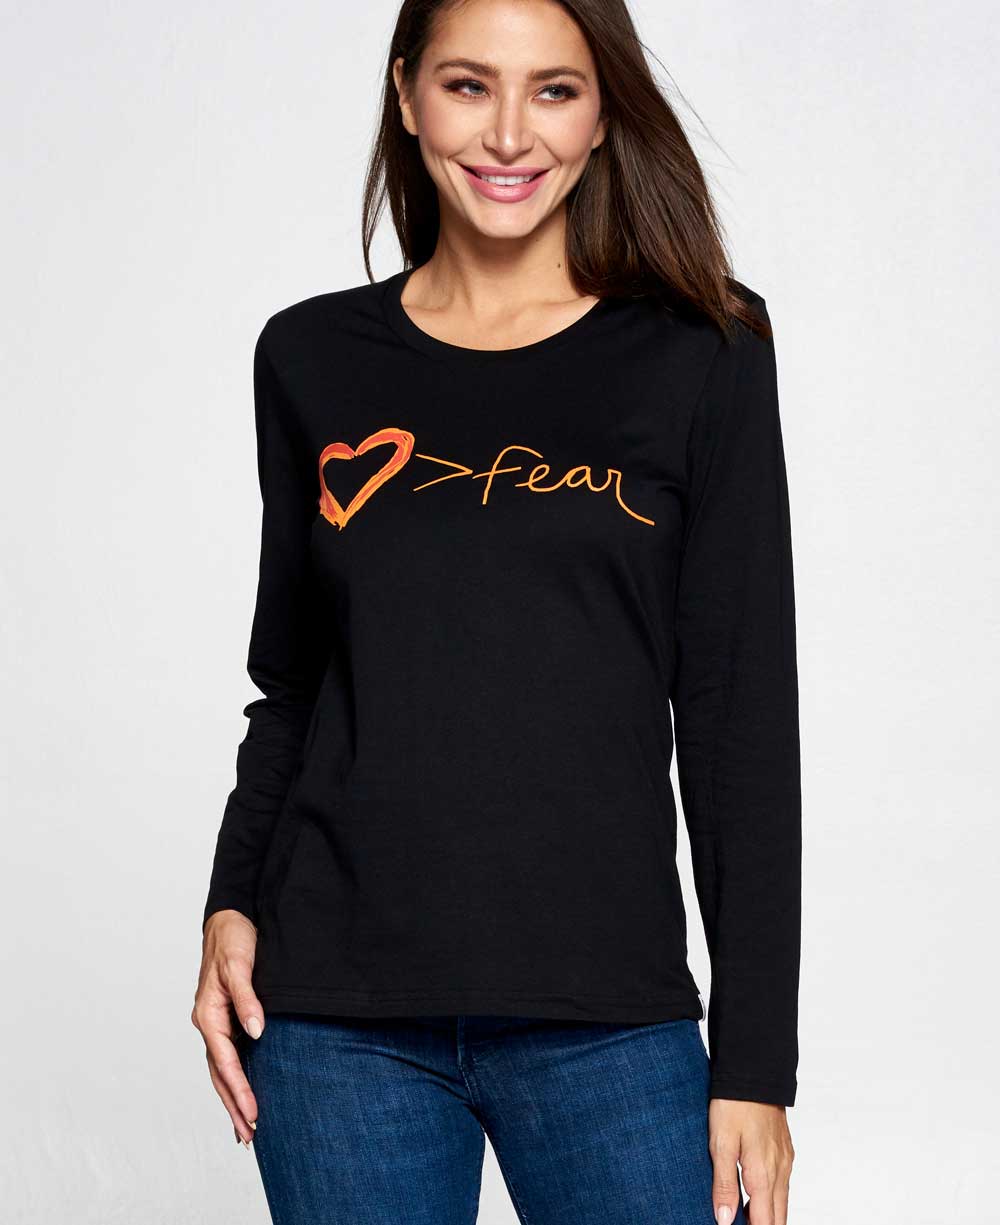 Fair Trade T-Shirt, Love Is Greater Than Fear - Shirts & Tops S